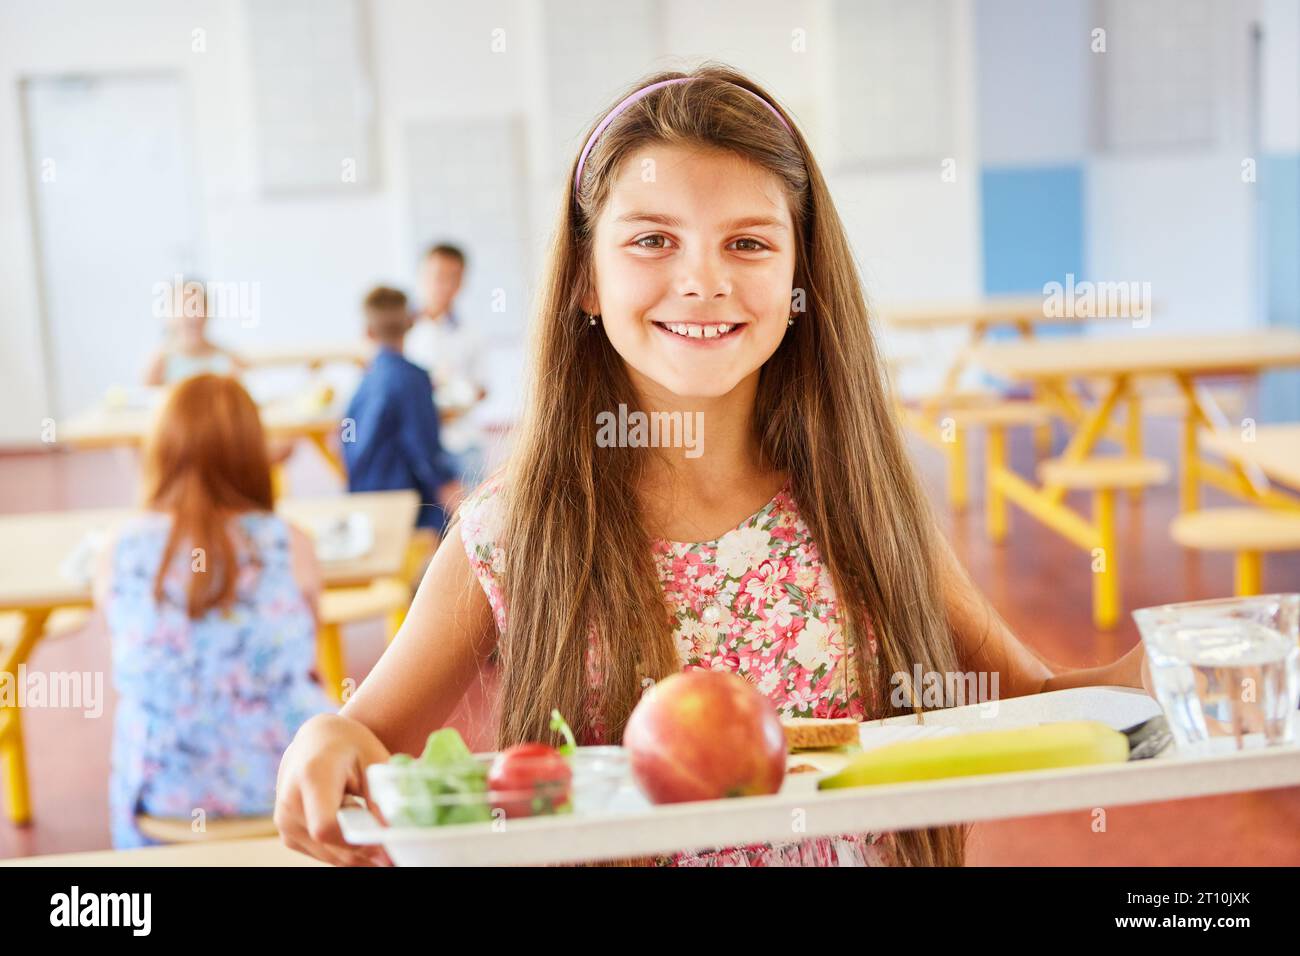 Portrait of happy schoolgirl with food tray standing in school cafeteria Stock Photo